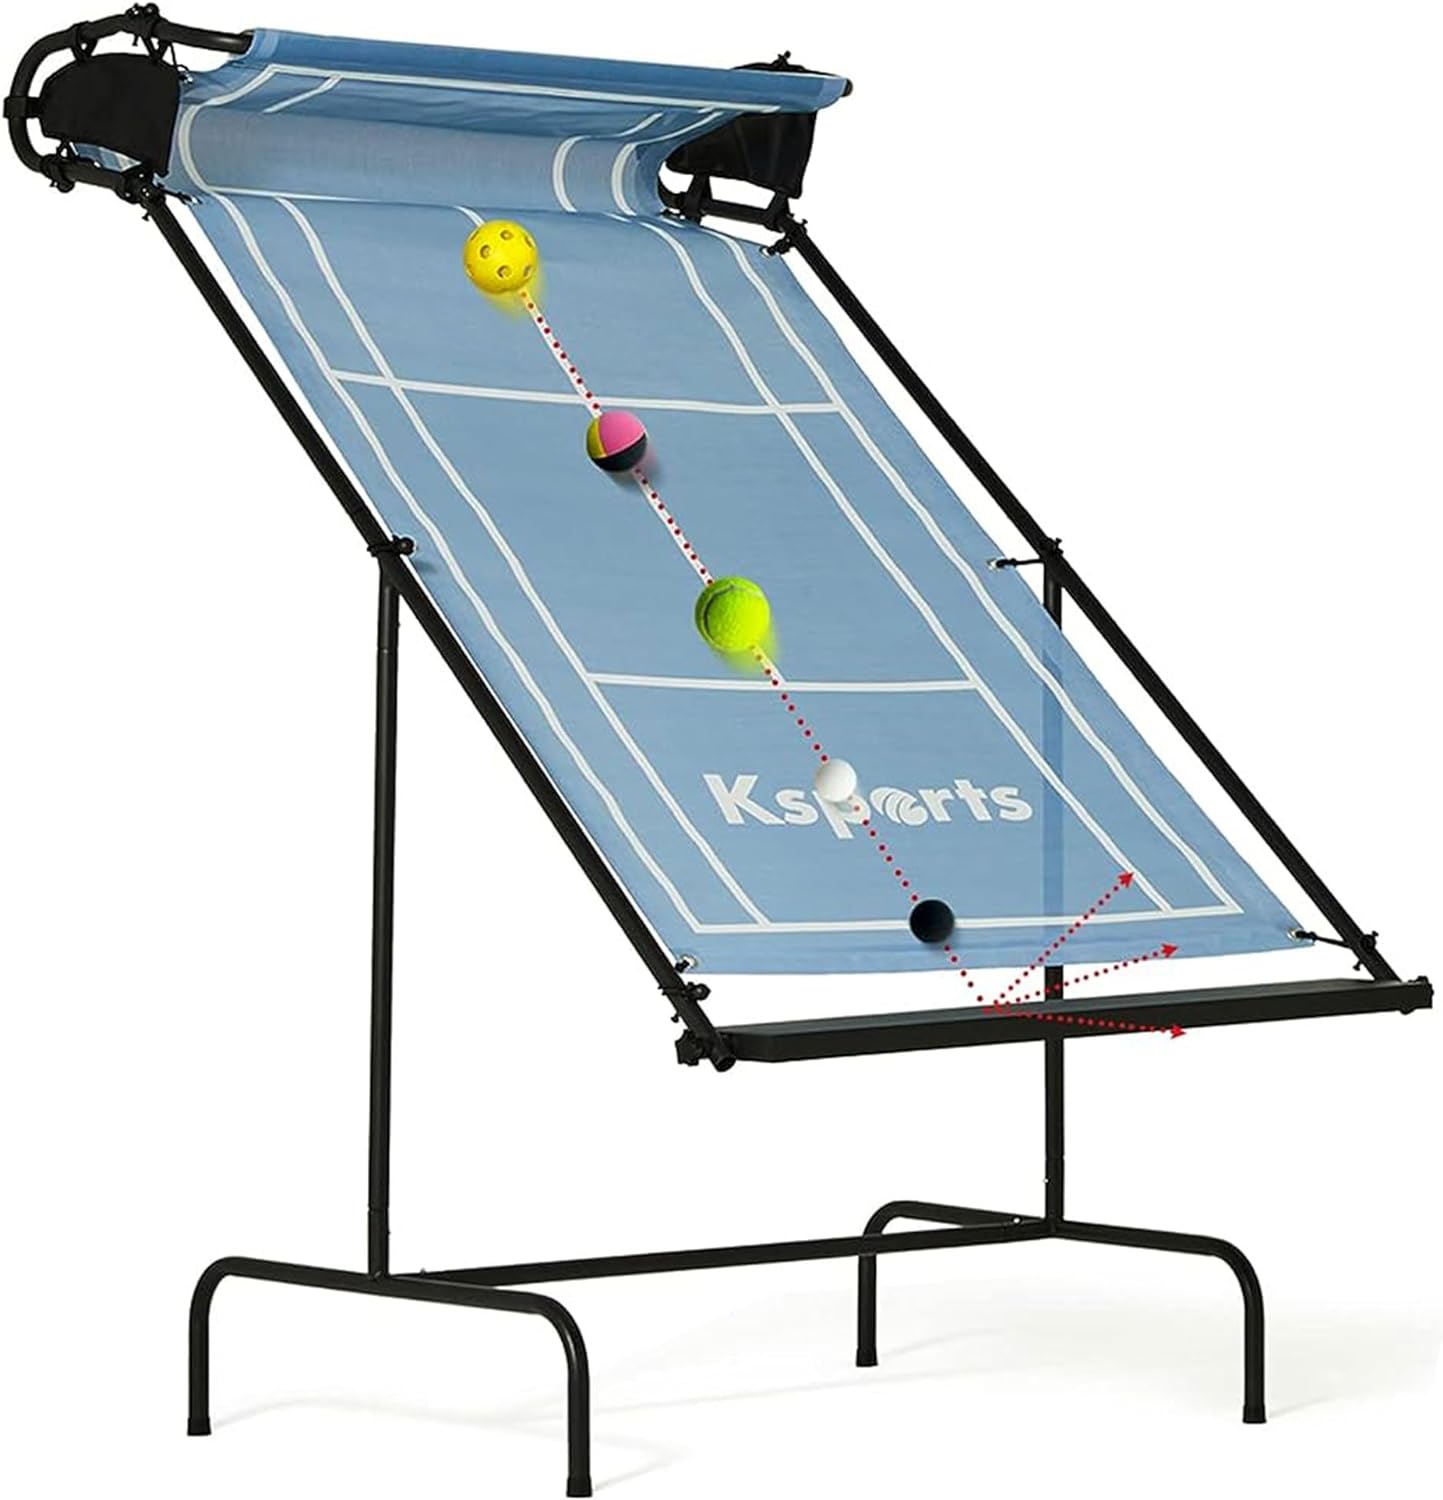 Ksports Tennis Rebounder Net Regular Blue (KSU9005)